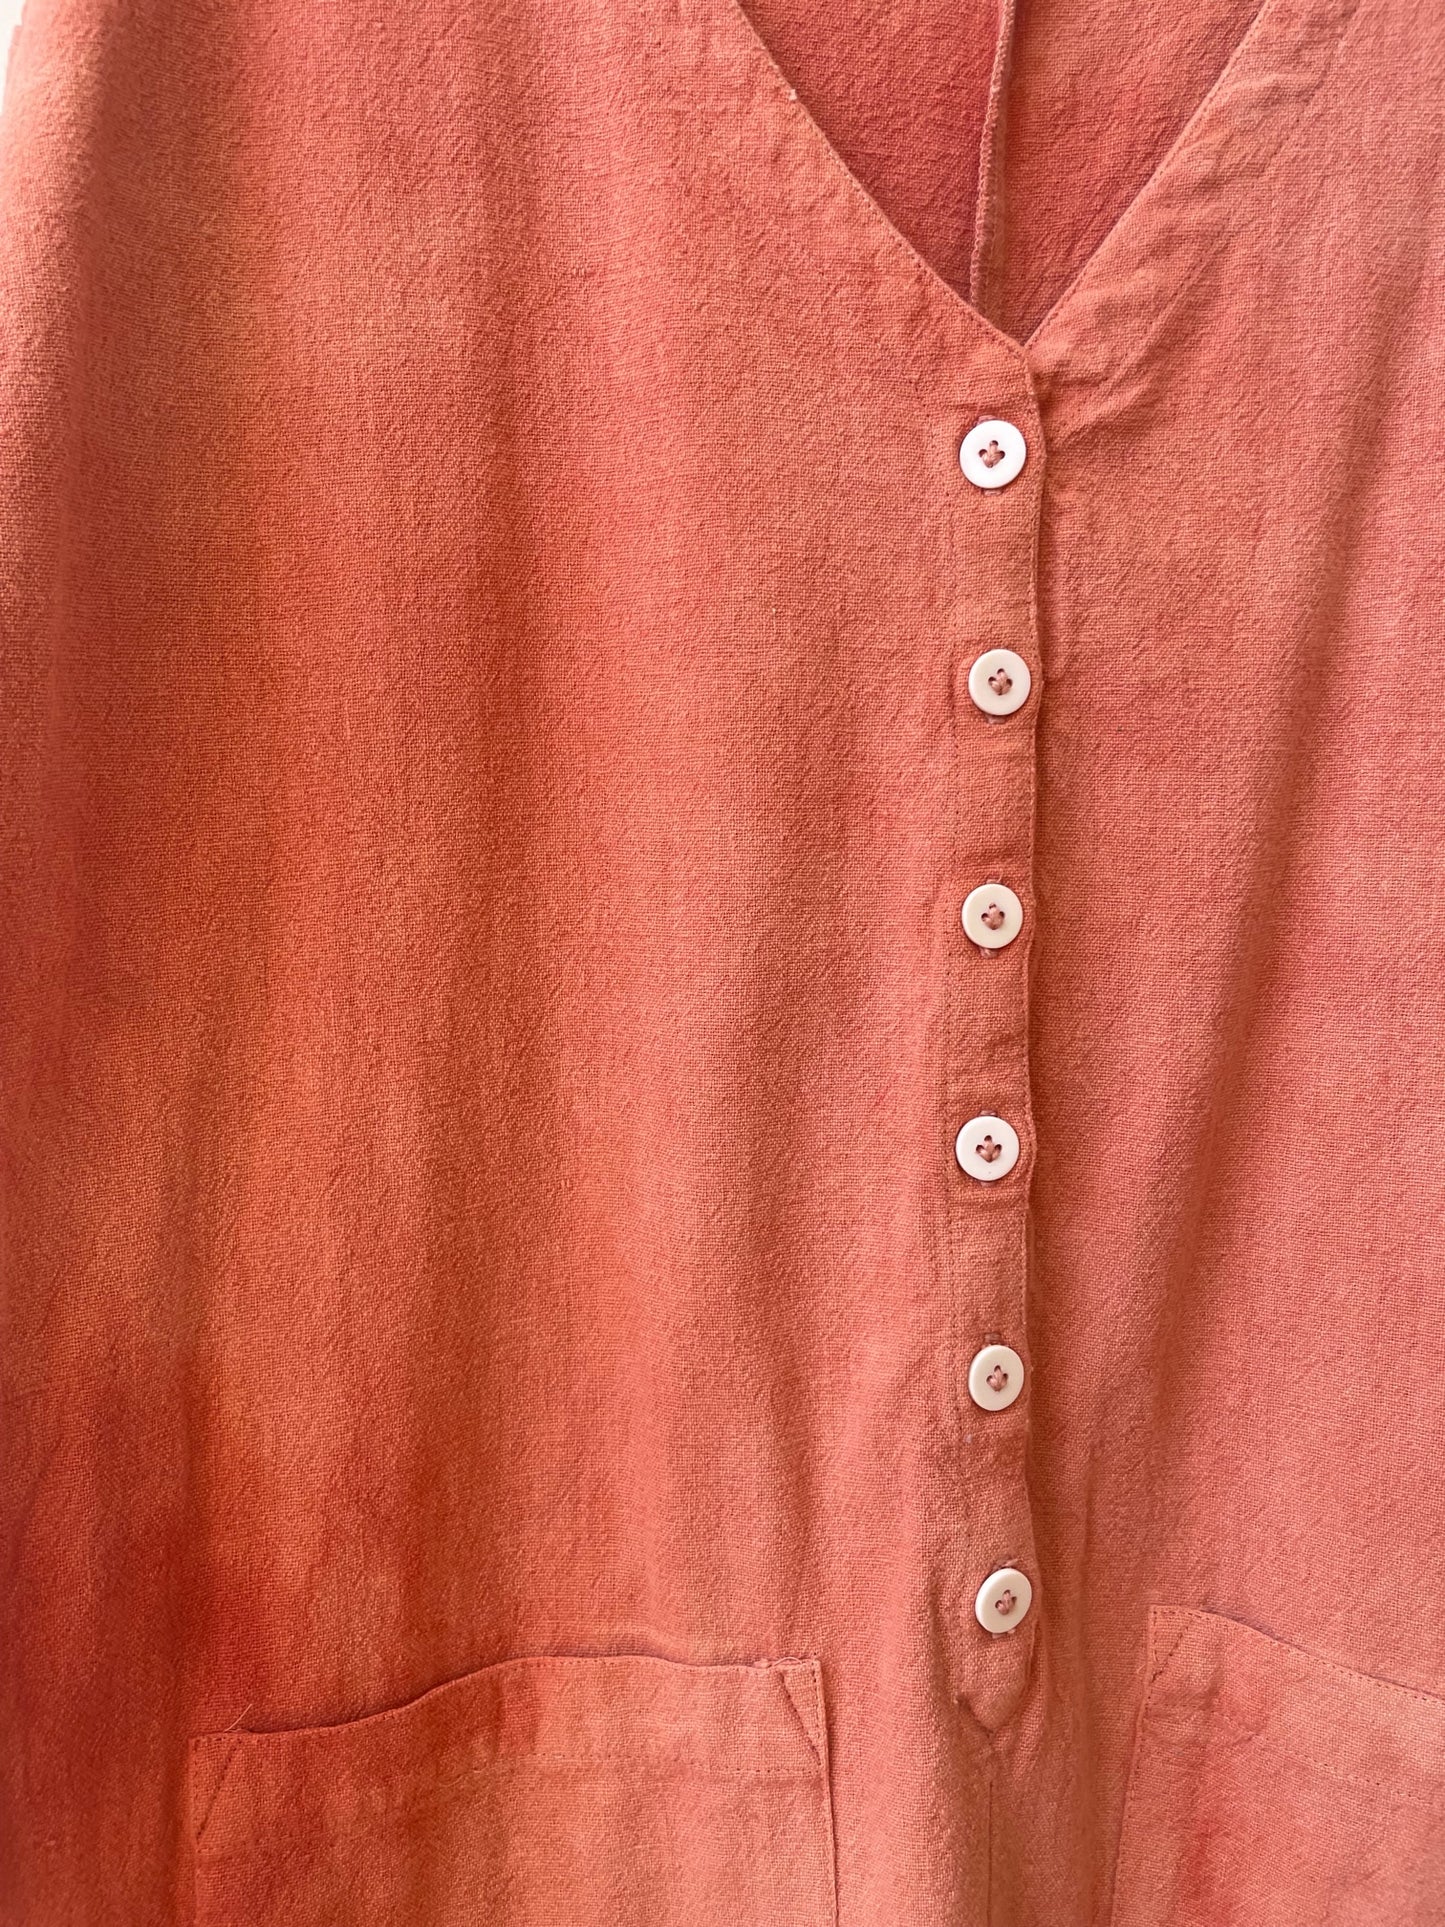 #54 Tie-dye Peach Jumpsuit S/M